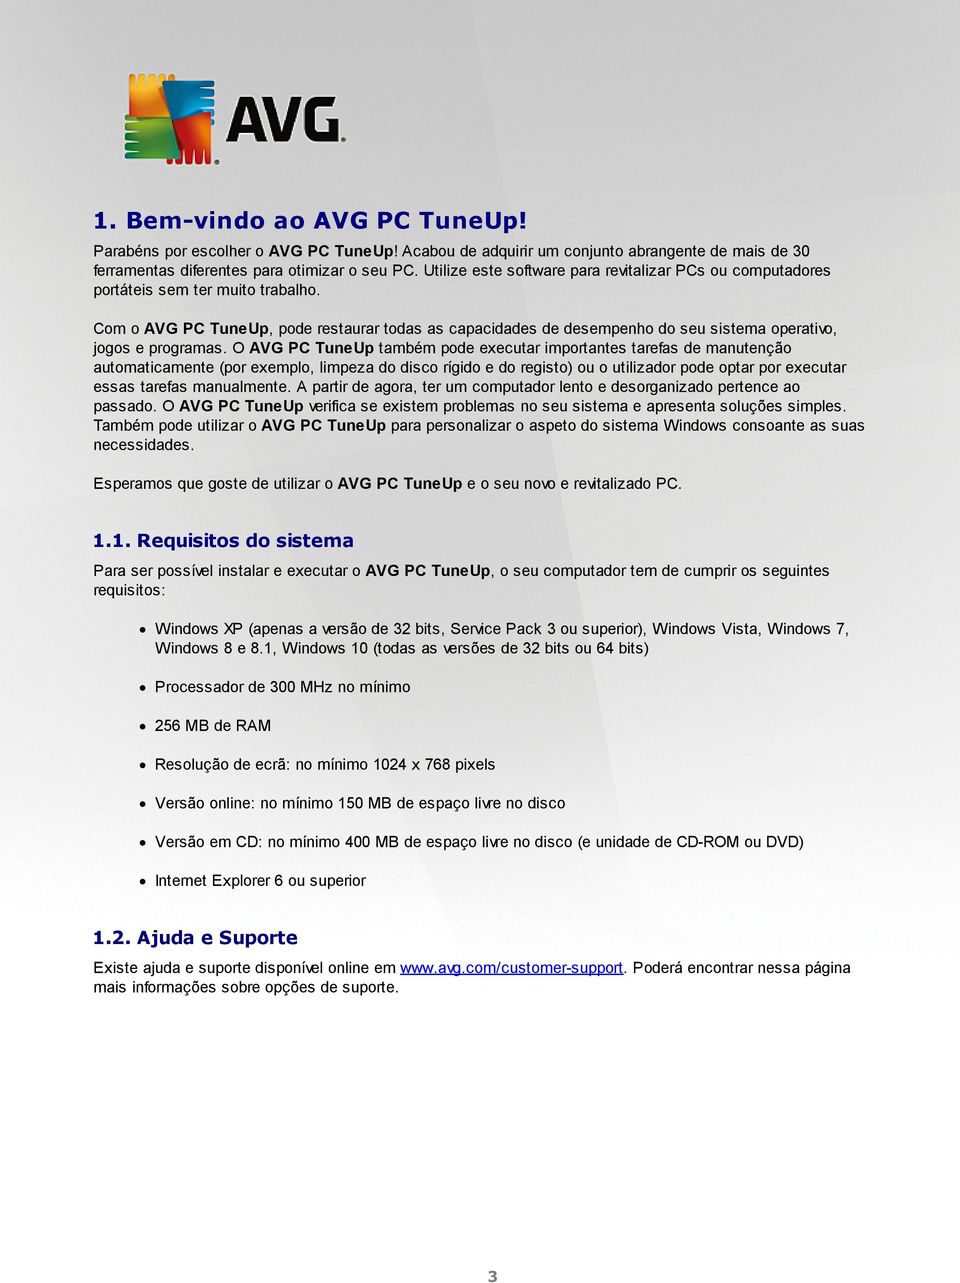 Com o AVG PC TuneUp, pode restaurar todas as capacidades de desempenho do seu sistema operativo, jogos e programas.